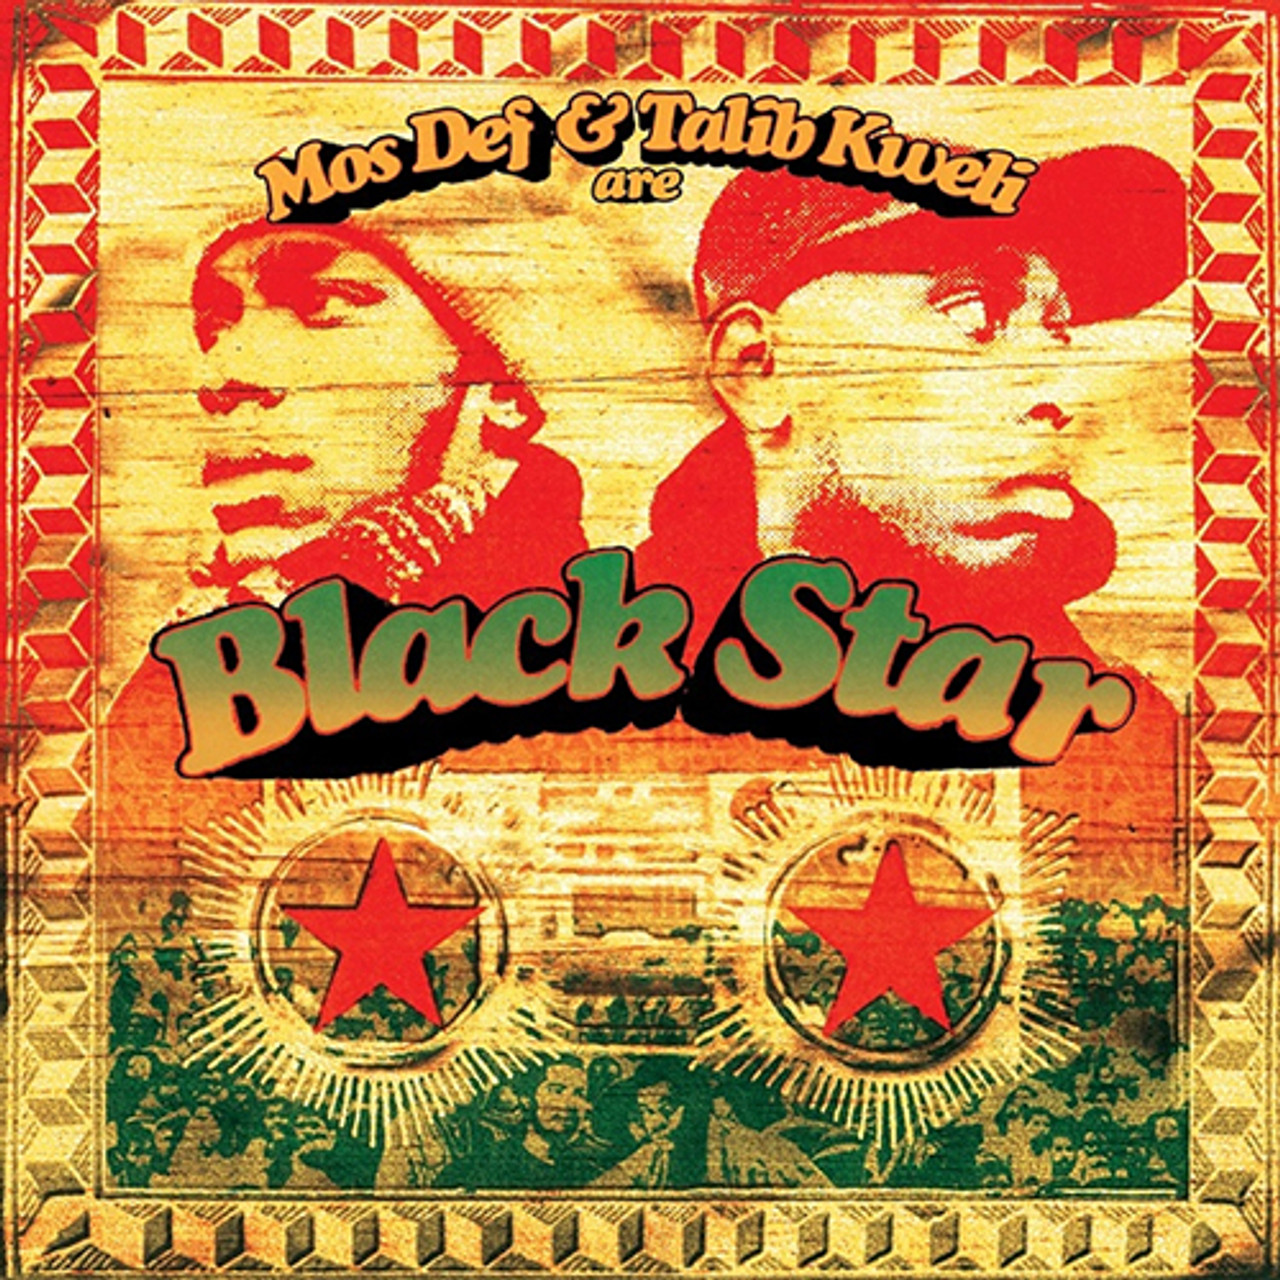 Black Star - Mos Def And Talib Kweli Are Black Star (Picture Vinyl LP)